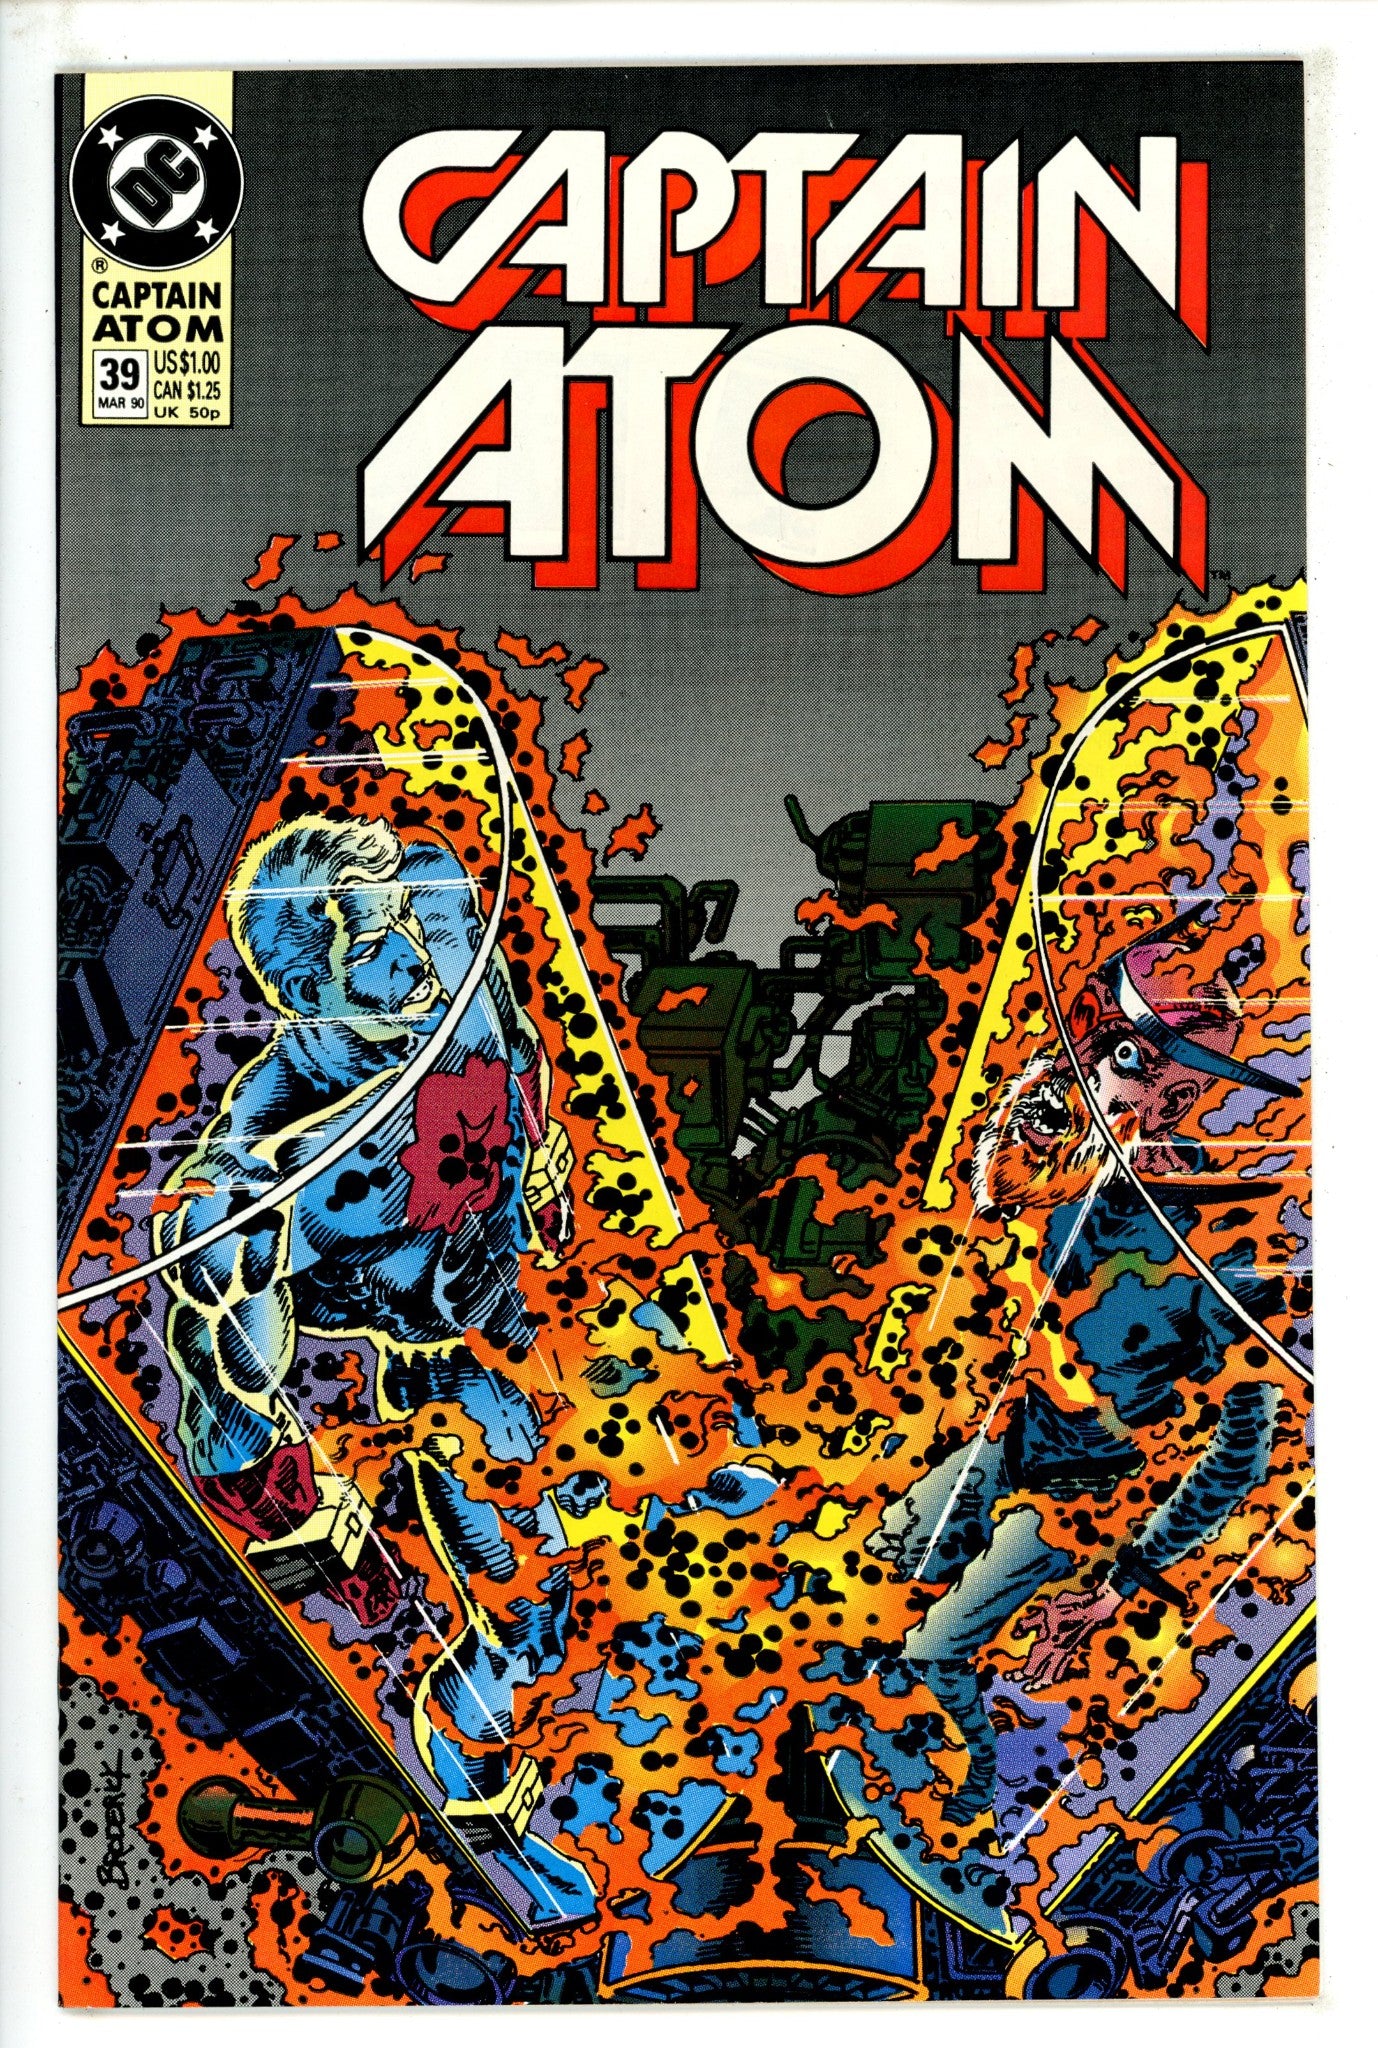 Captain Atom Vol 3 39 (1990)